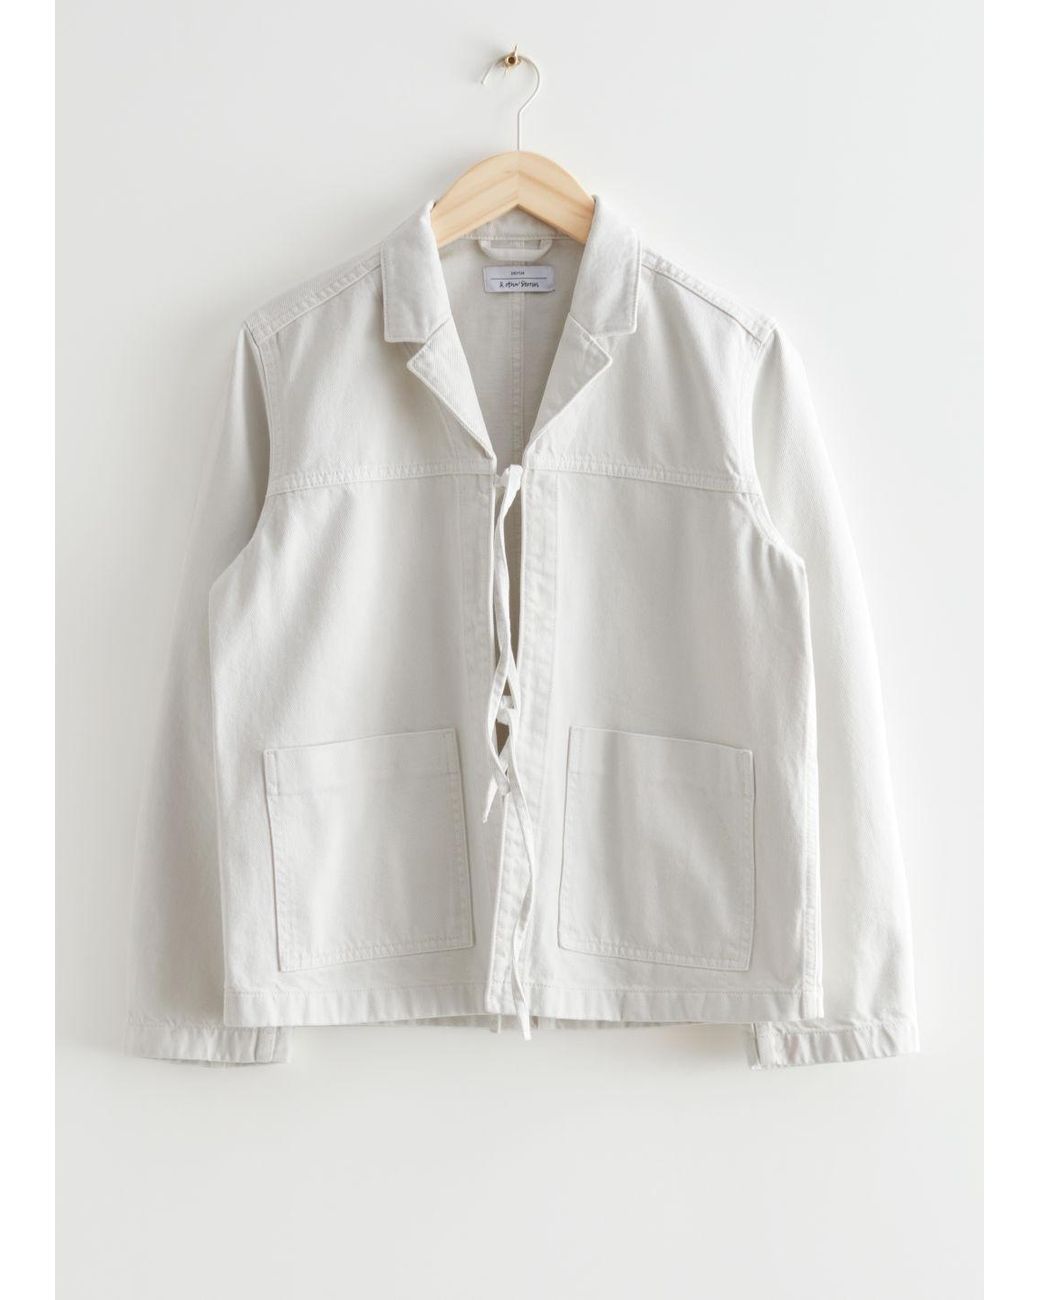 & Other Stories Front Tie Denim Jacket in White | Lyst